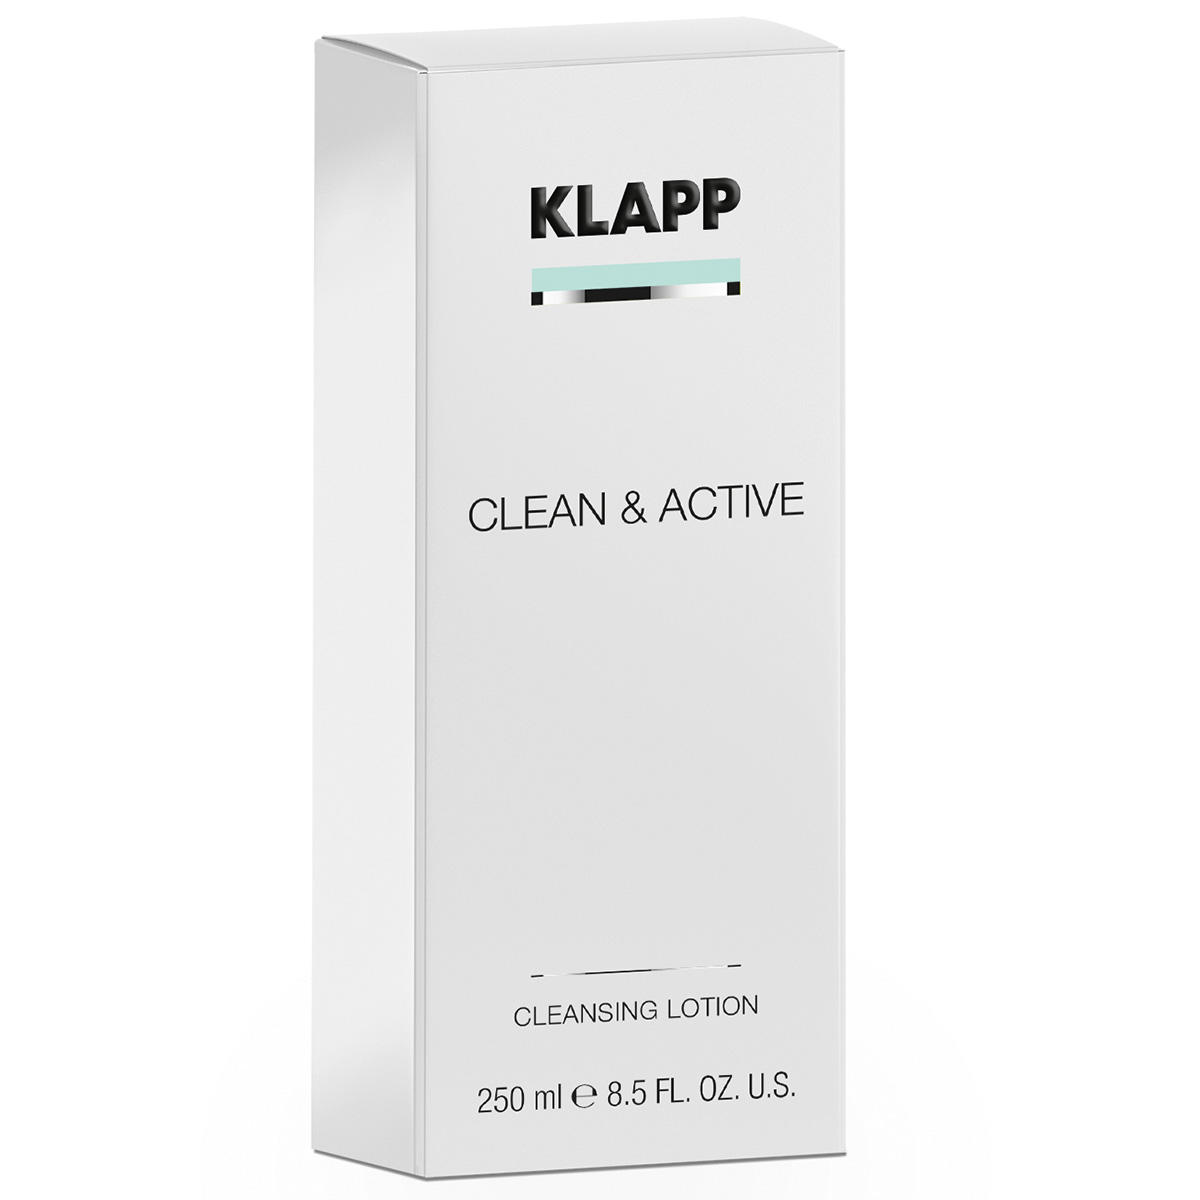 KLAPP CLEAN & ACTIVE Cleansing Lotion 250 ml - 2